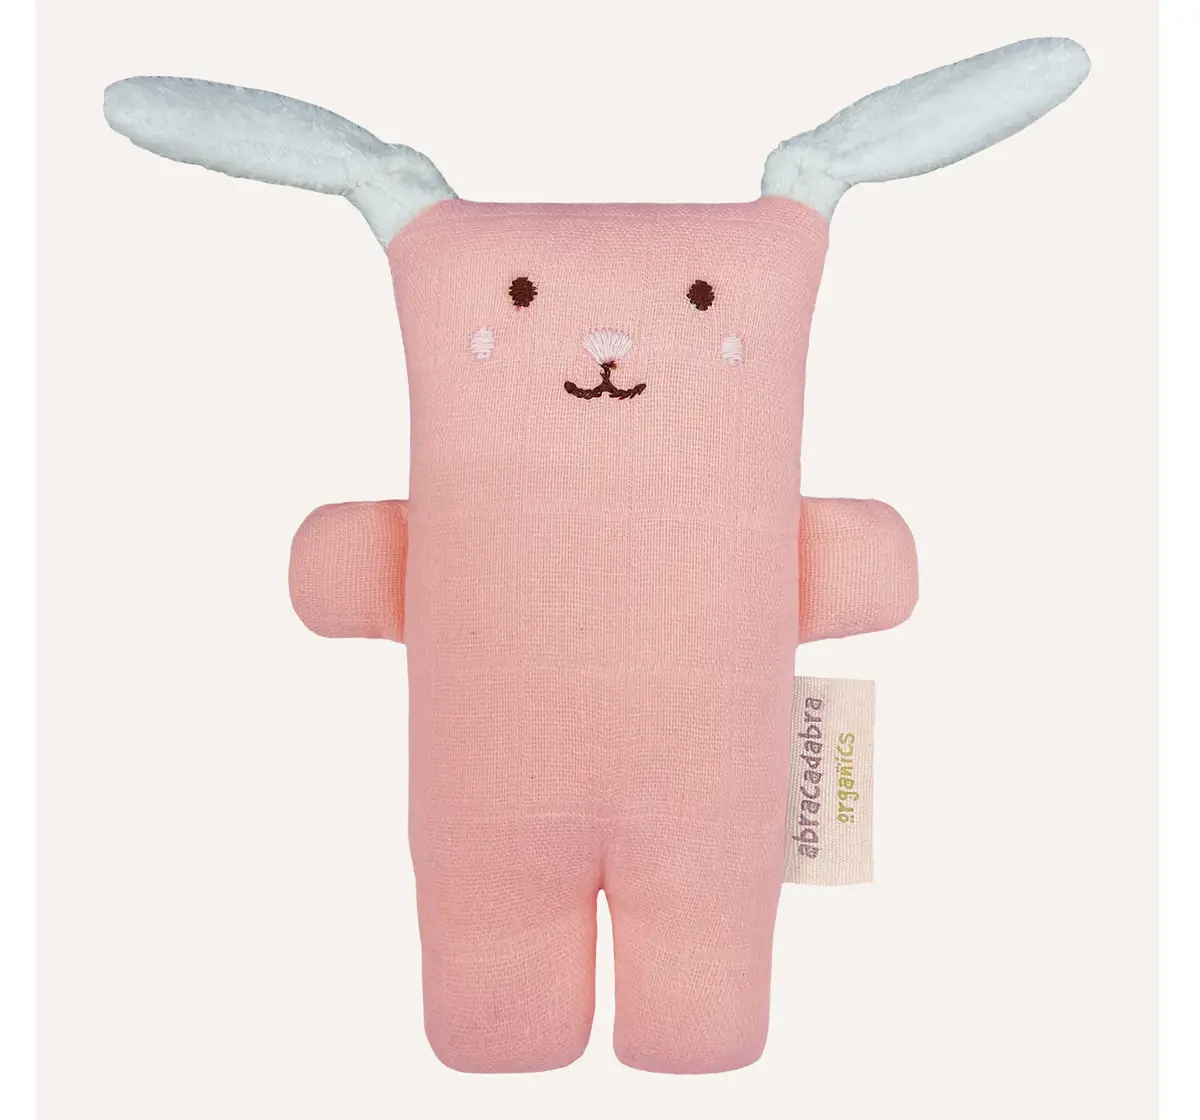 Abracadabra Organics Collectible Cuddle Toy 0Y+ Pink